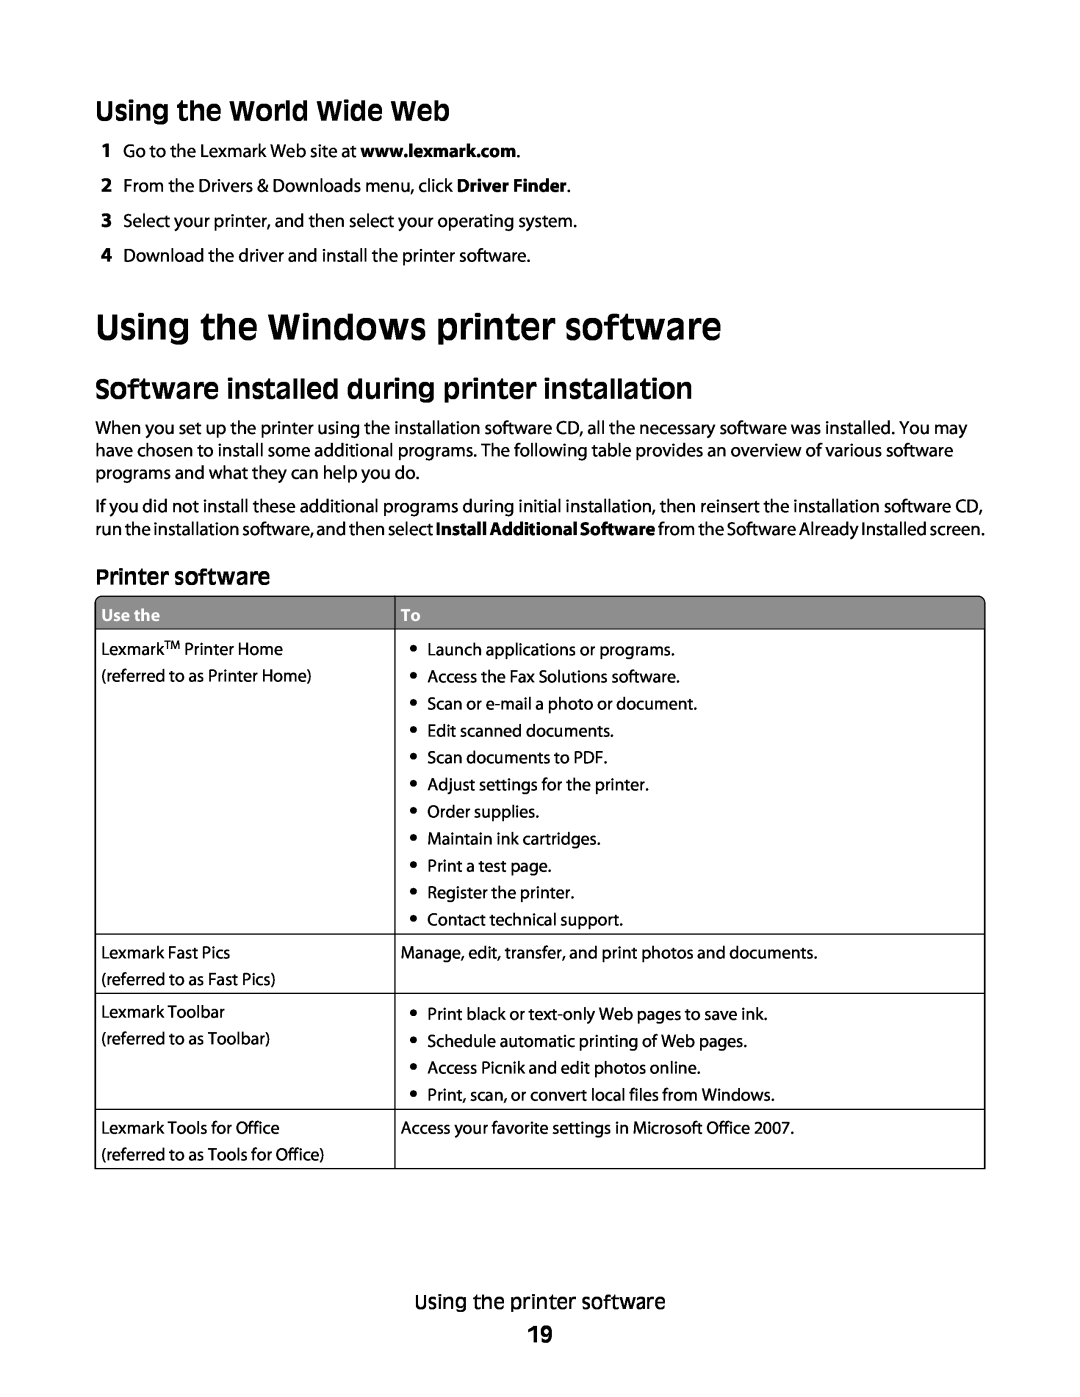 Lexmark Pro205, Pro208, Pro207 manual Using the Windows printer software, Using the World Wide Web, Printer software 